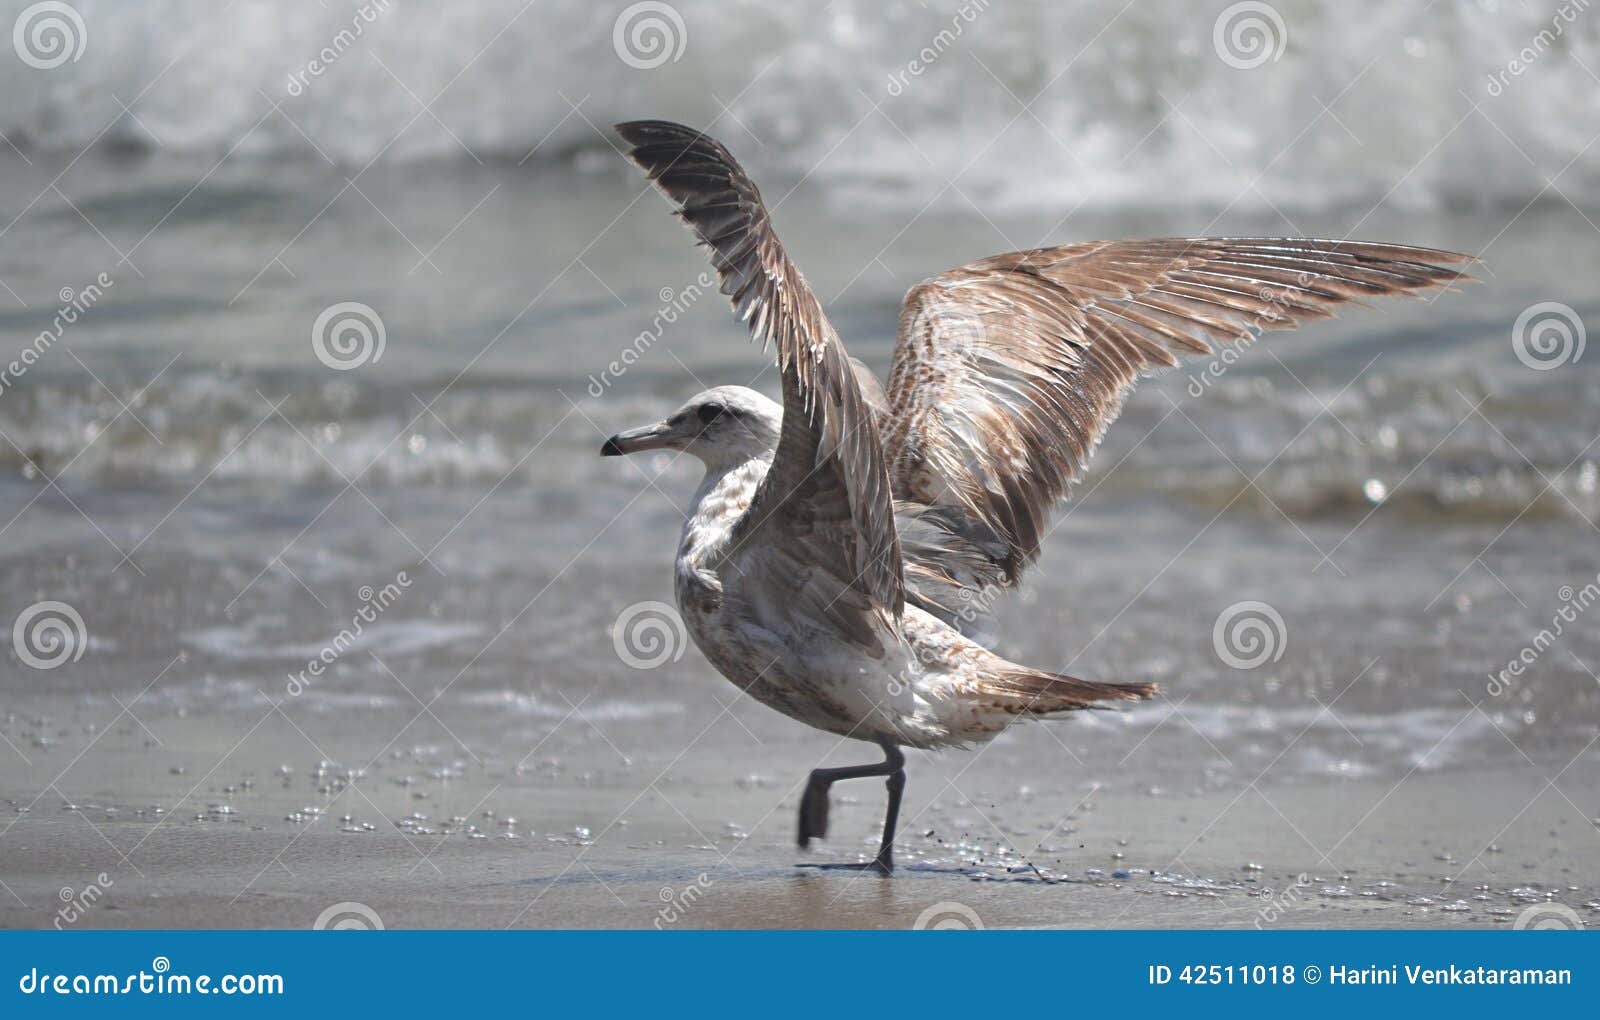 seagull at monterey bay